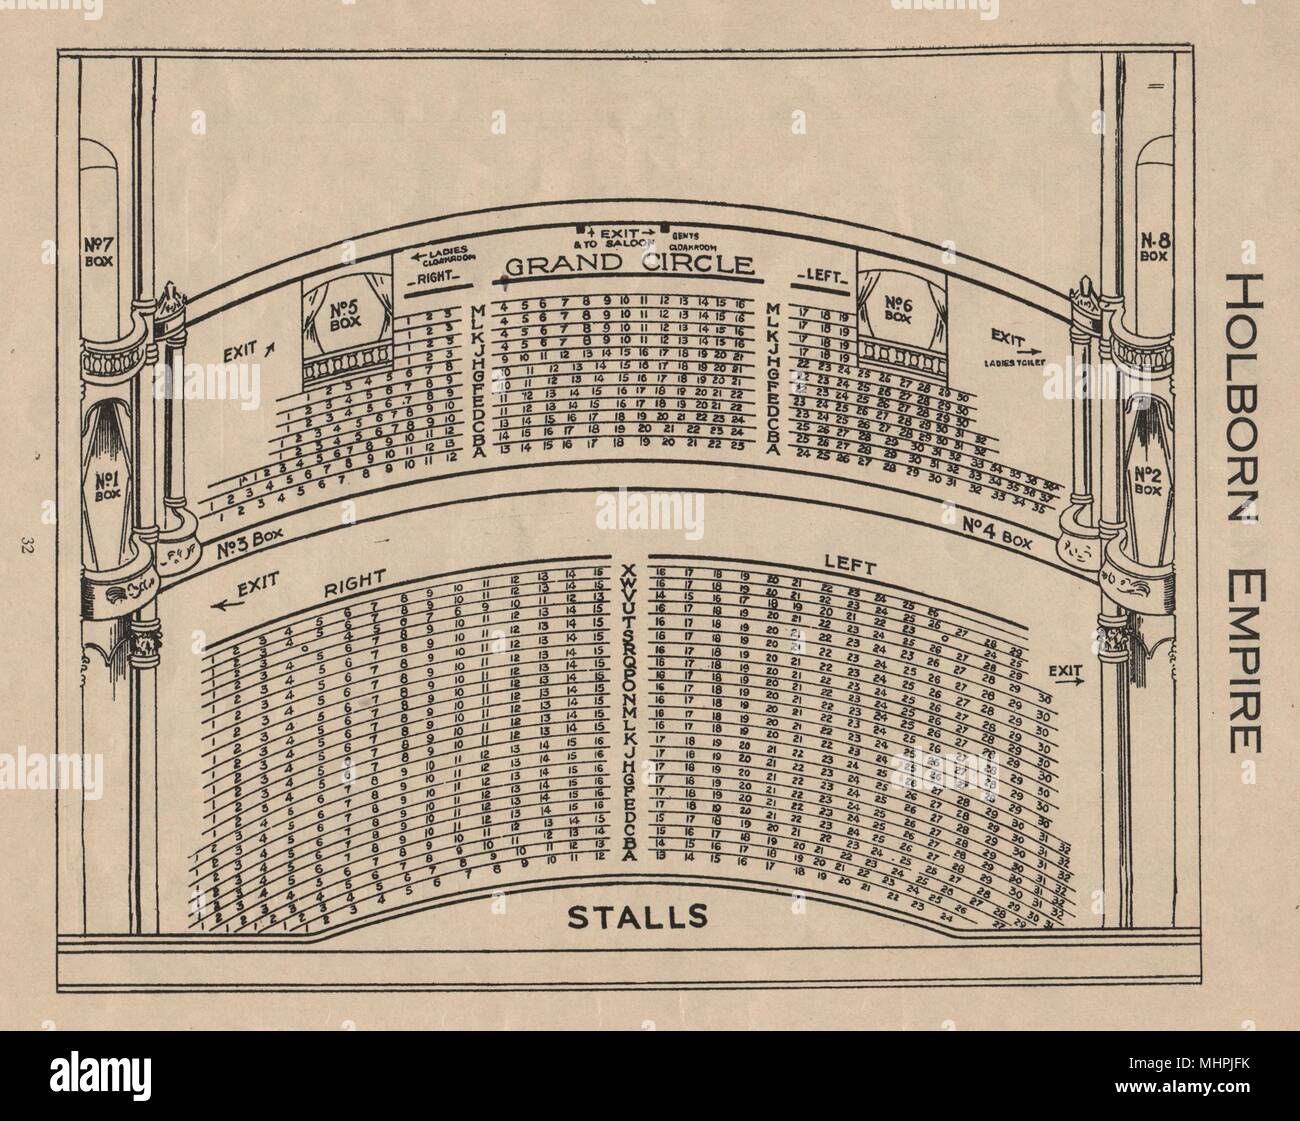 London Music Hall Seating Chart